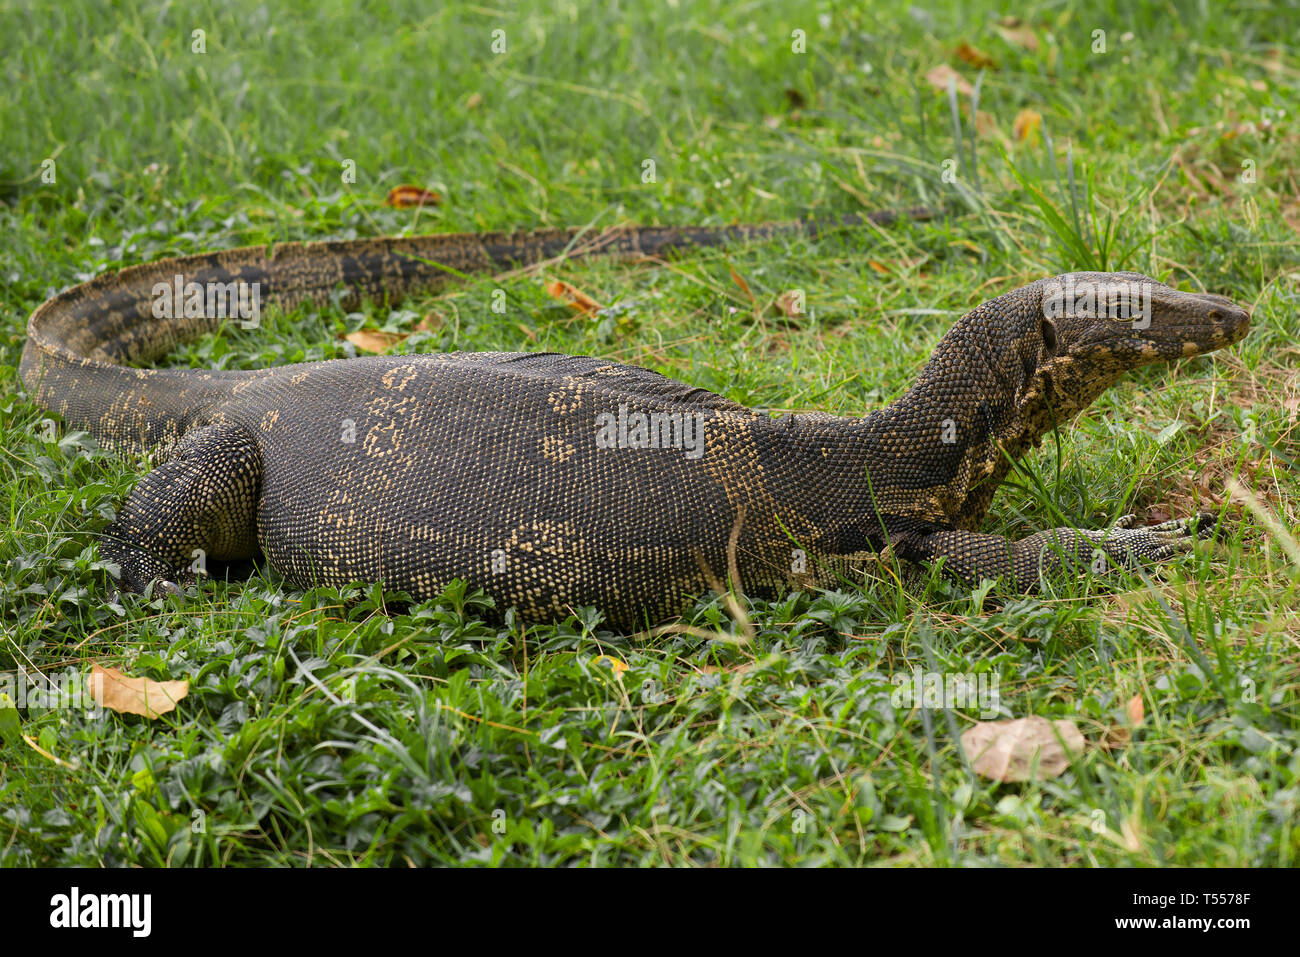 Striped monitor lizards (Varanus salvator) on grass close up. Park Lumpini, Bangkok Stock Photo